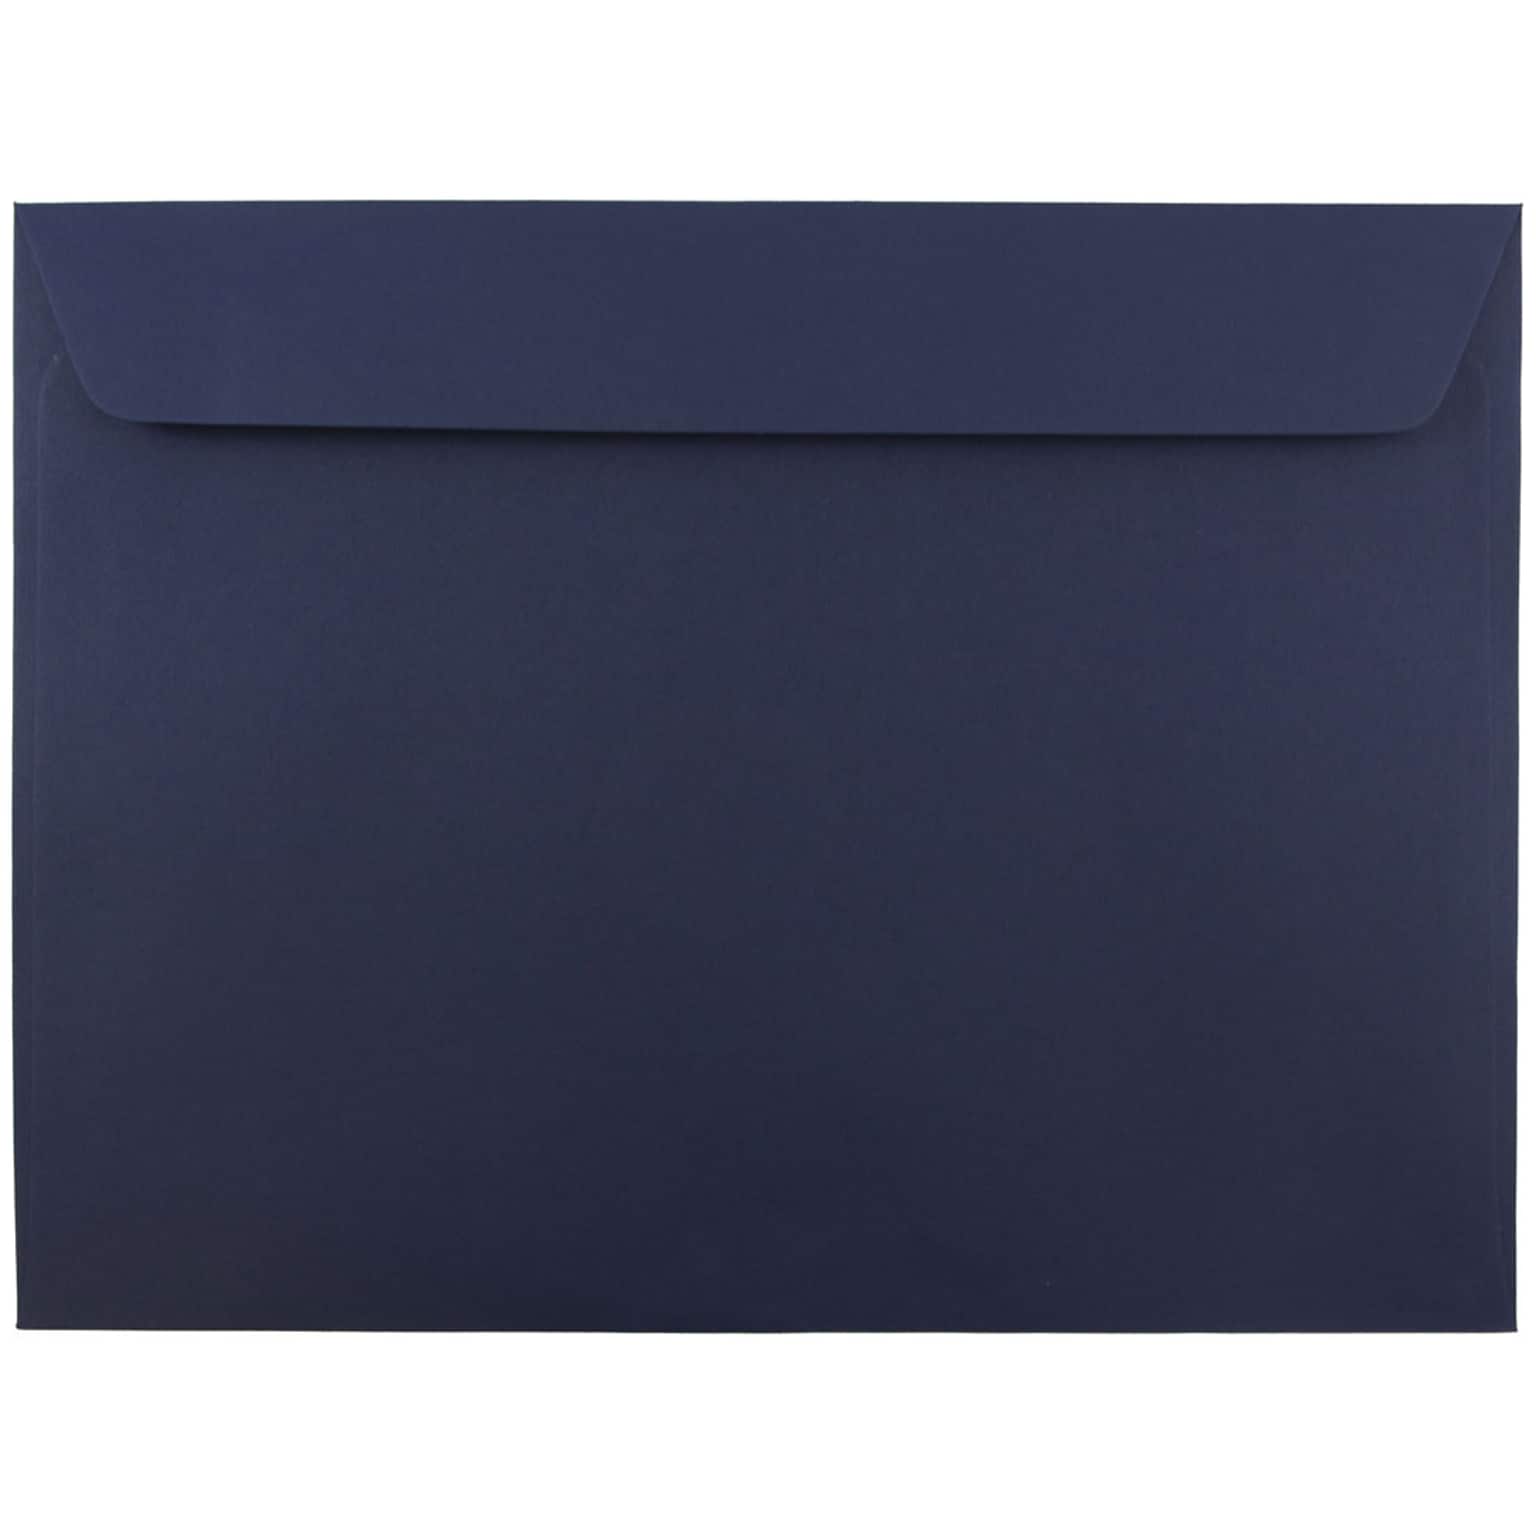 JAM Paper 9 x 12 Booklet Envelopes, Navy Blue, 100/Pack (263916011c)